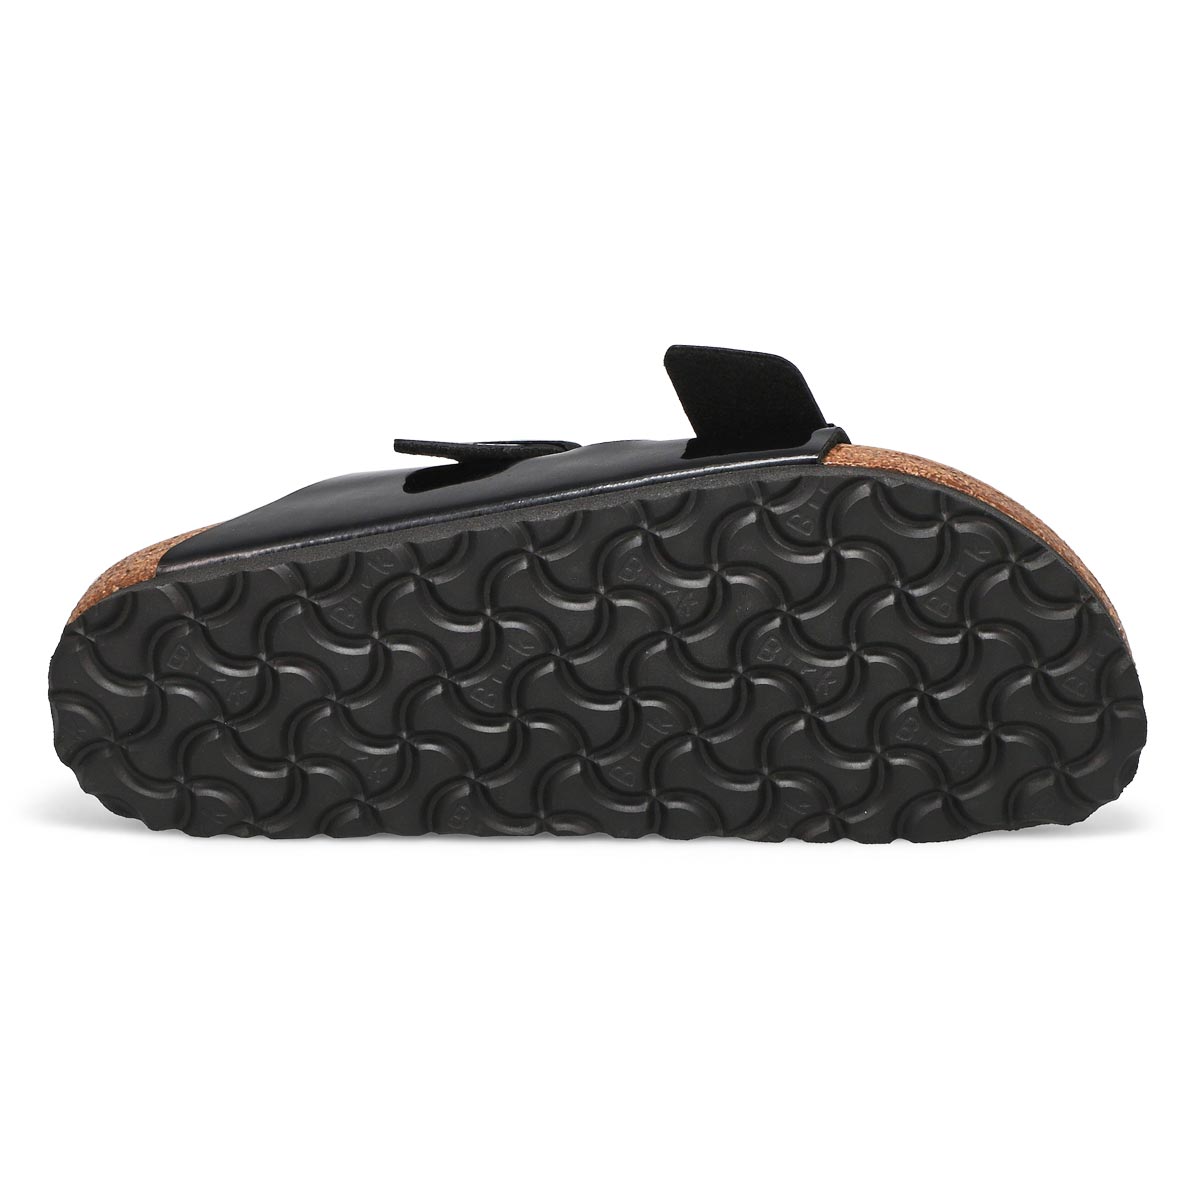 Women's Arizona Birko-Flor 2 Strap Narrow Footbed Sandal- Black Patent